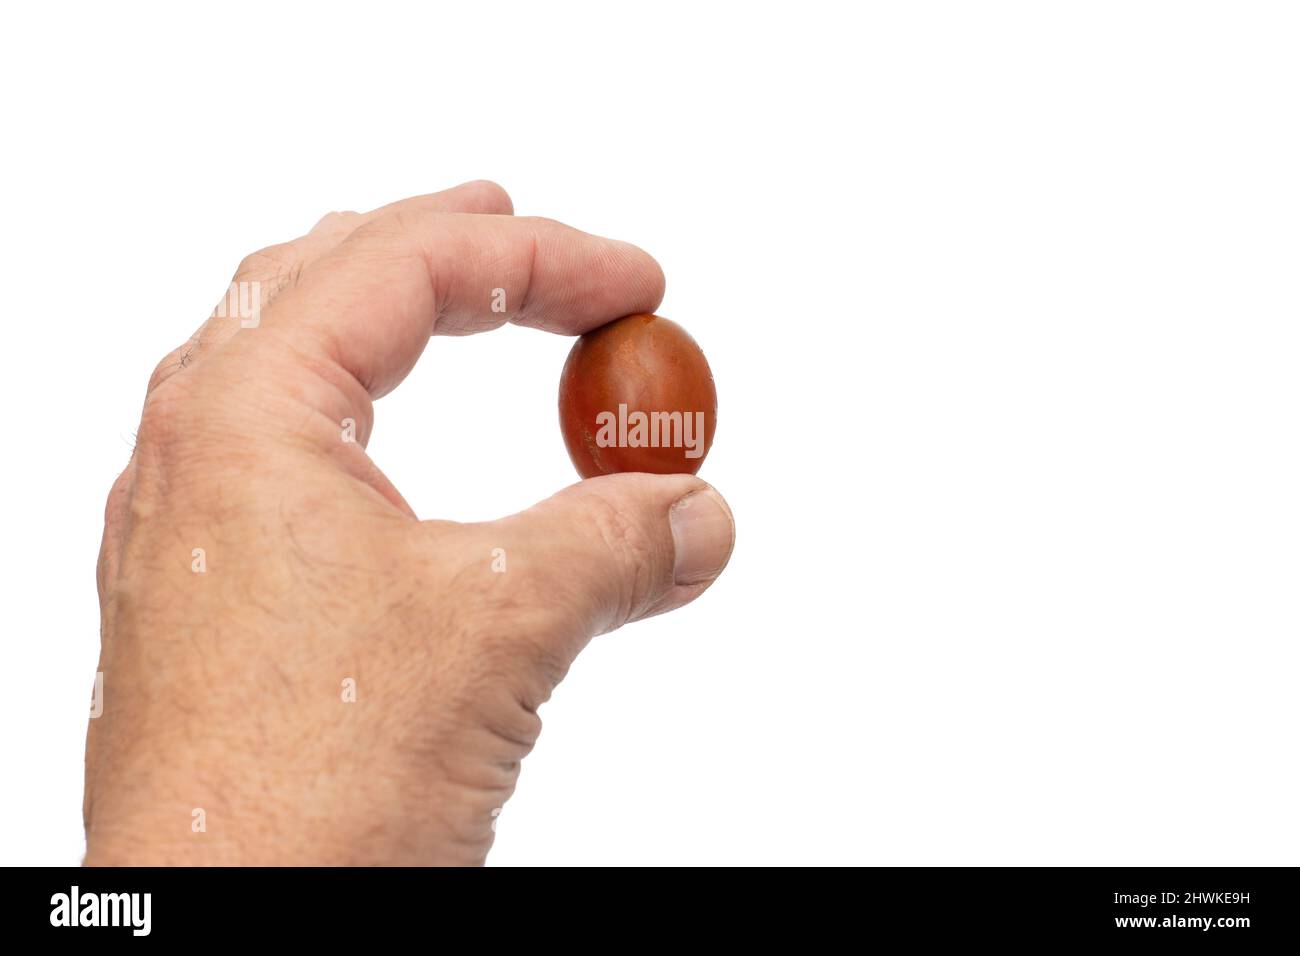 A hand holding a cherry tomato, the mini kumato variety. Isolated on white background. Stock Photo